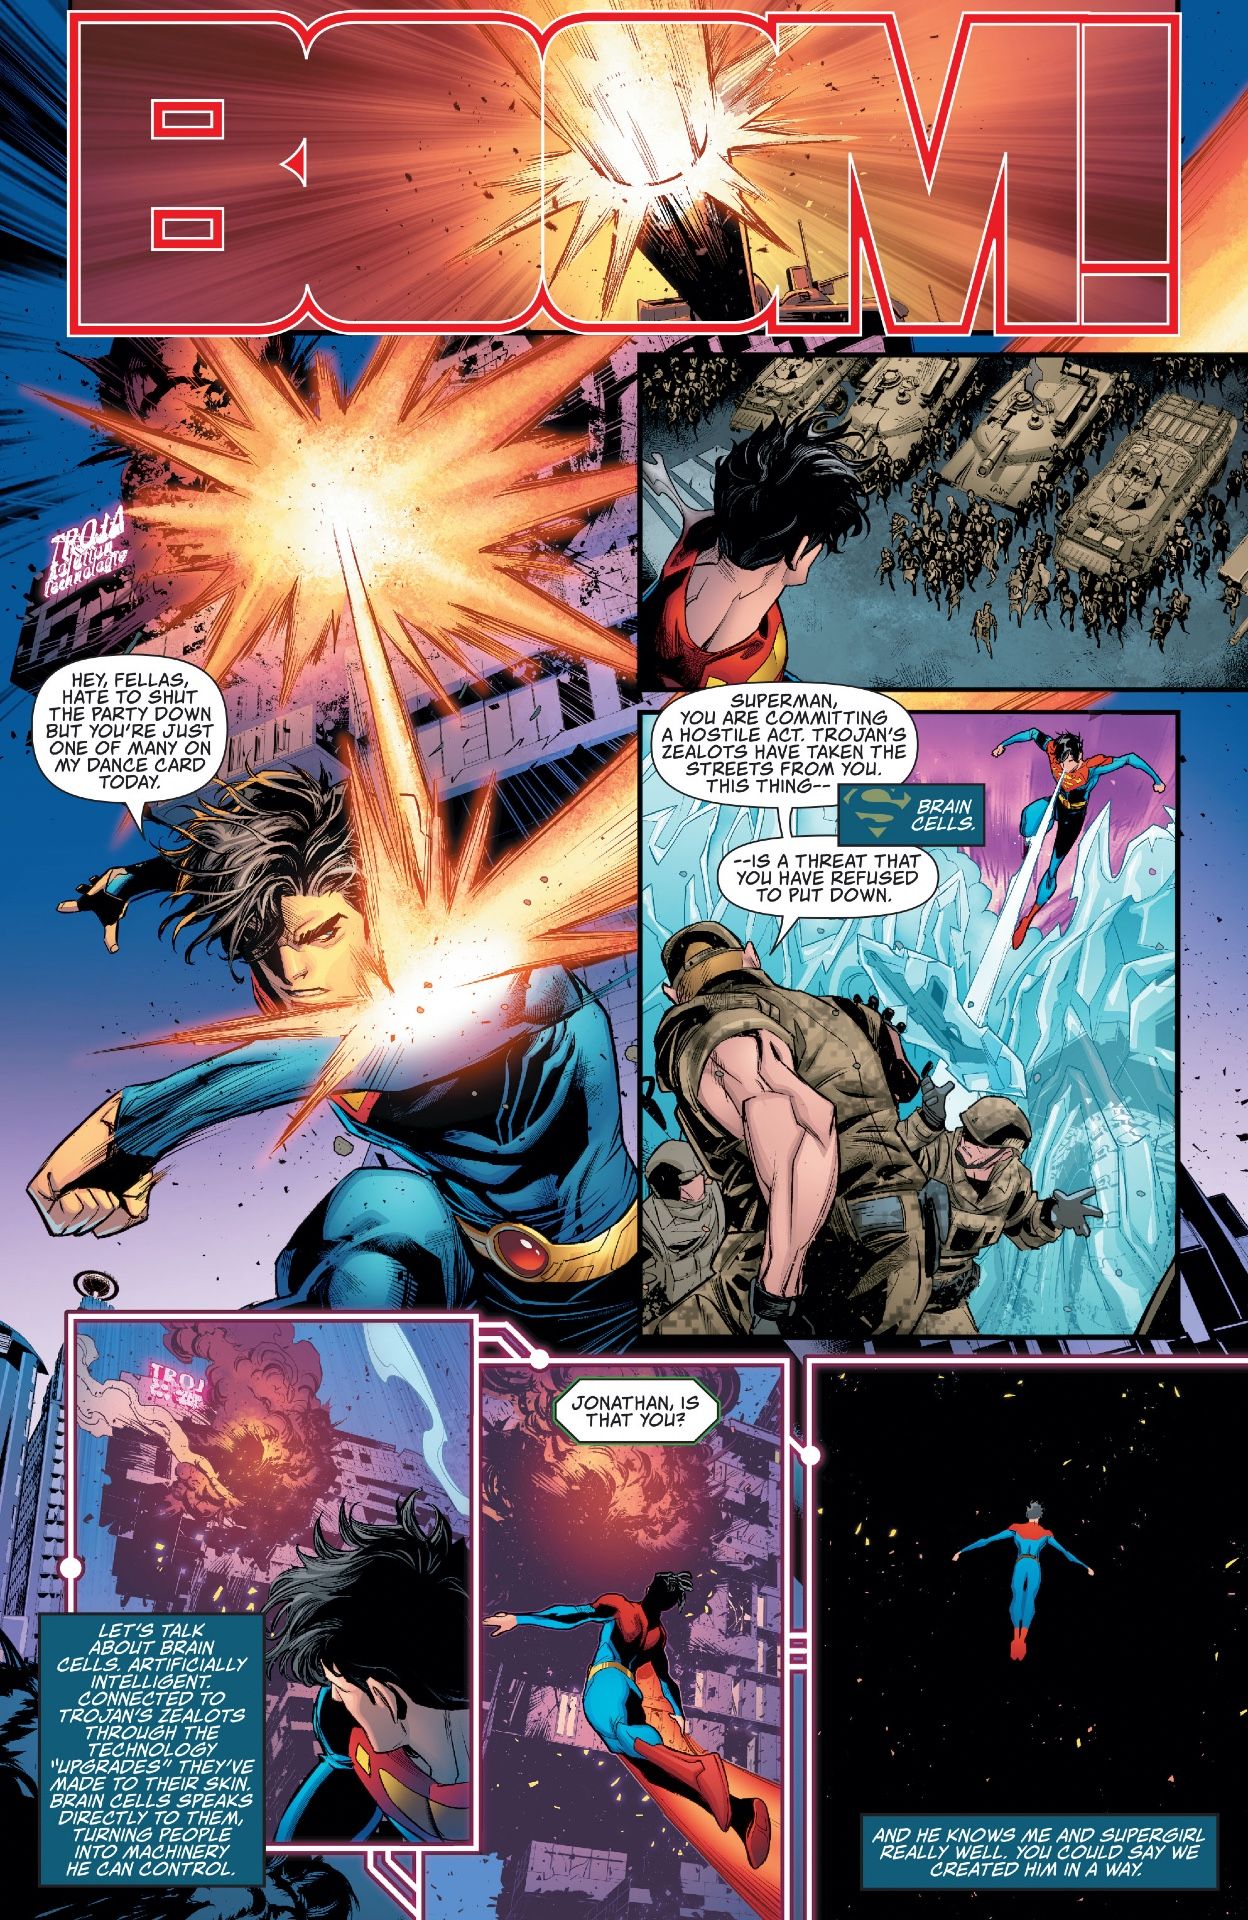 DC Reveals the Nightmarish Metropolis of the Future